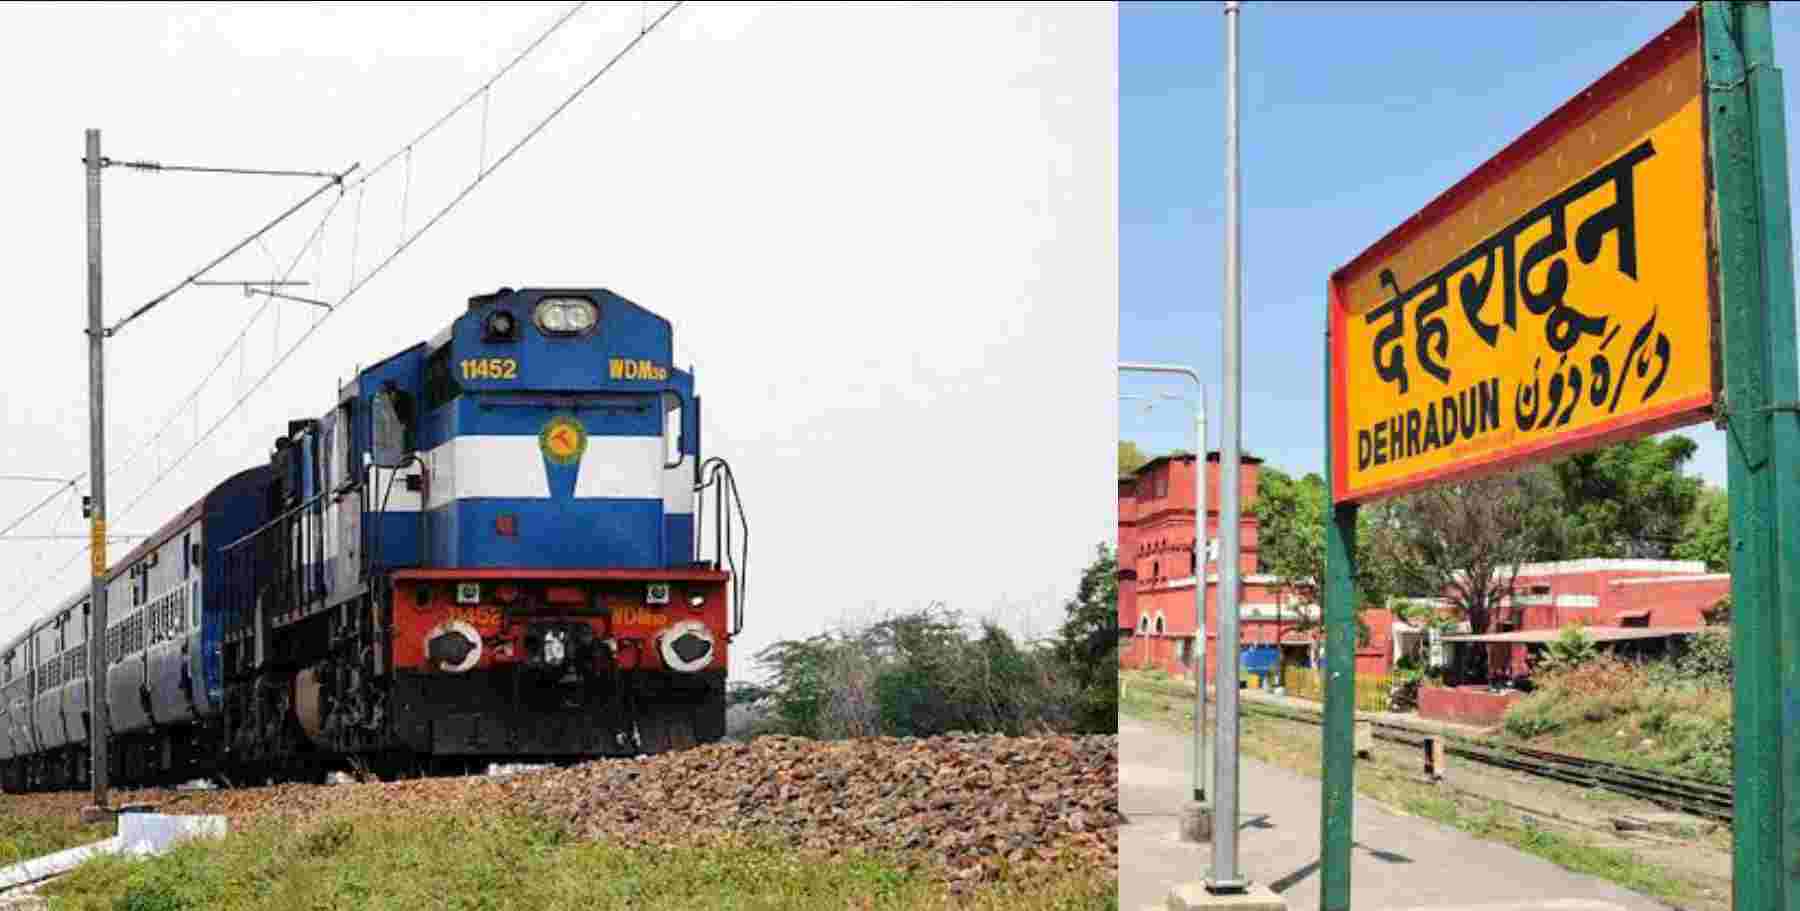 Uttarakhand news: The operation of these trains running from Dehradun to Gorakhpur Lucknow has resumed.